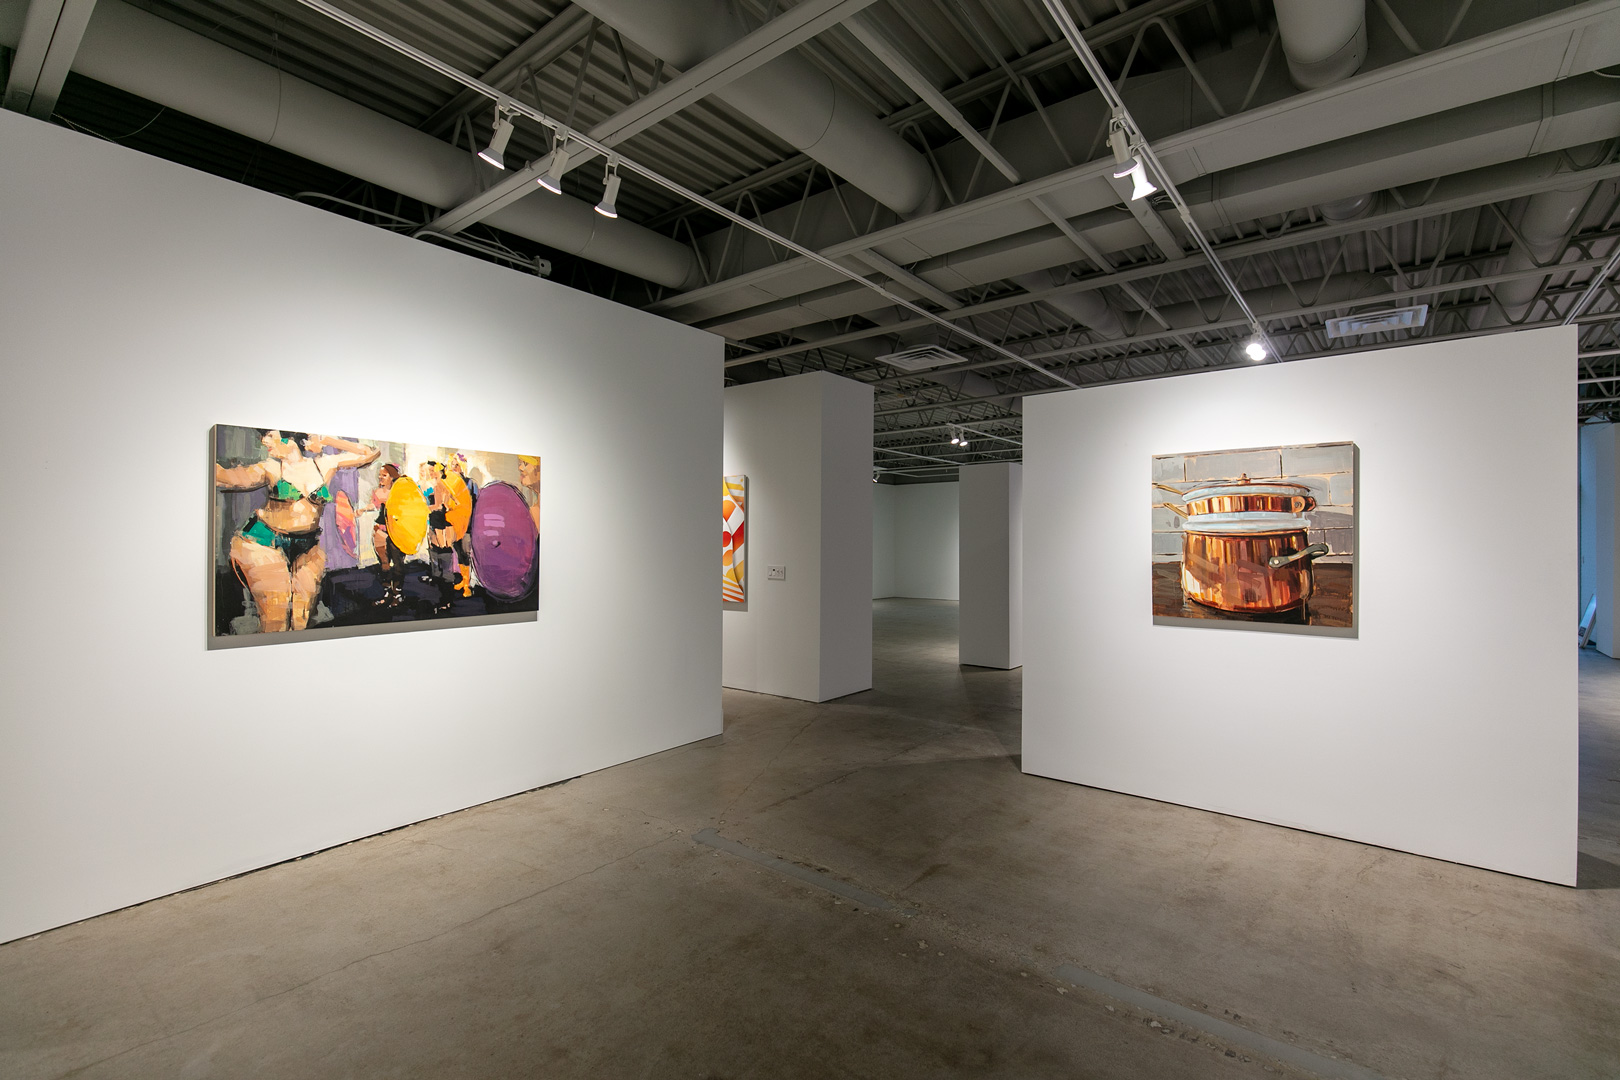 Artworks included in Dean Kube 2021 Moberg Gallery Exhibit